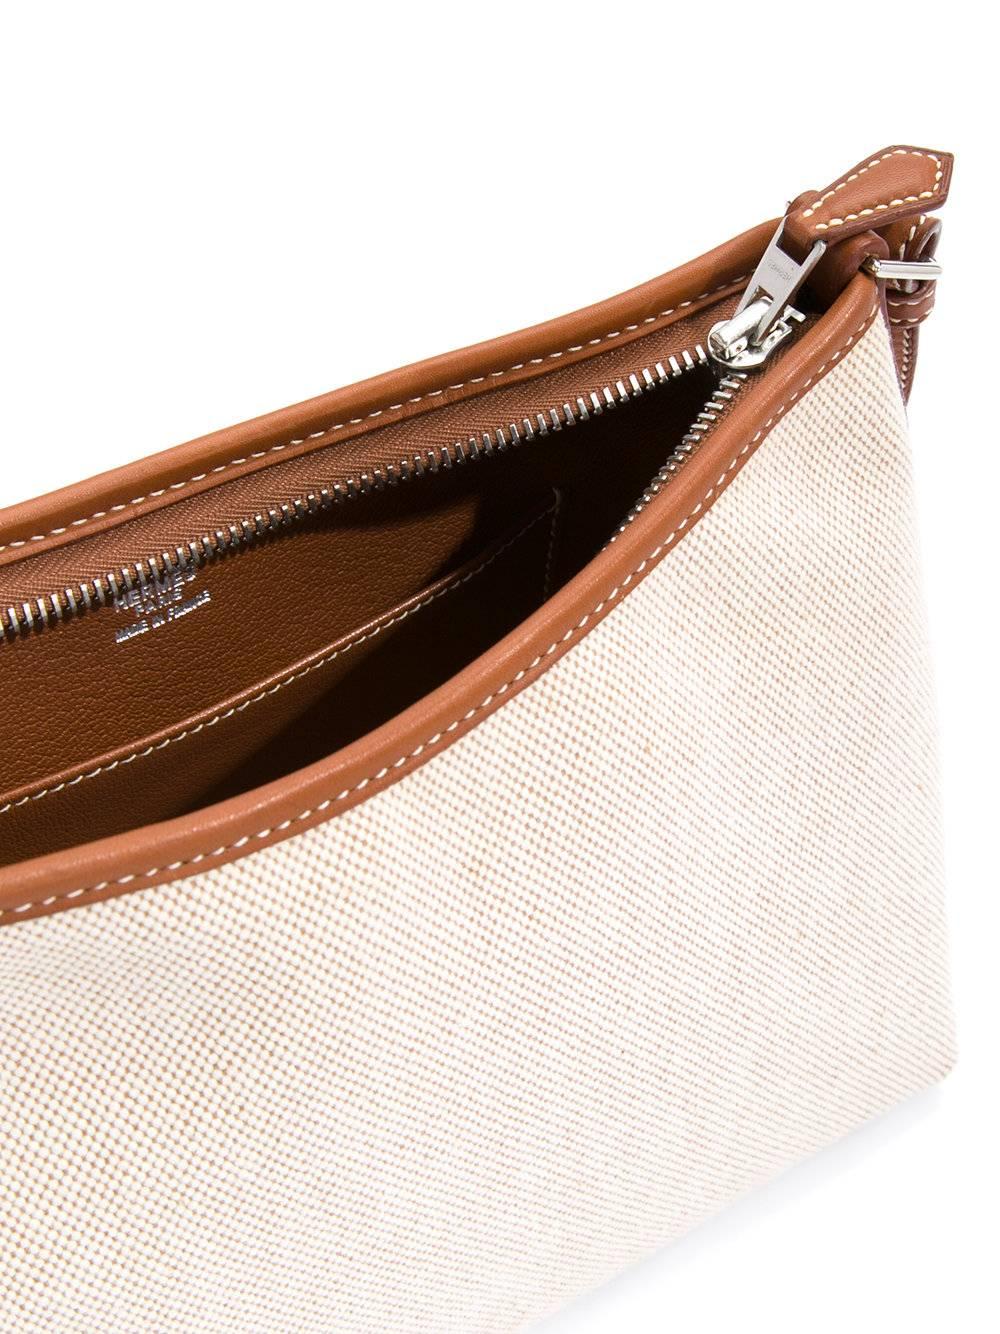 Women's Hermes Tan Canvas Cognac Leather Trim Top Handle Satchel Shoulder Bag in Box